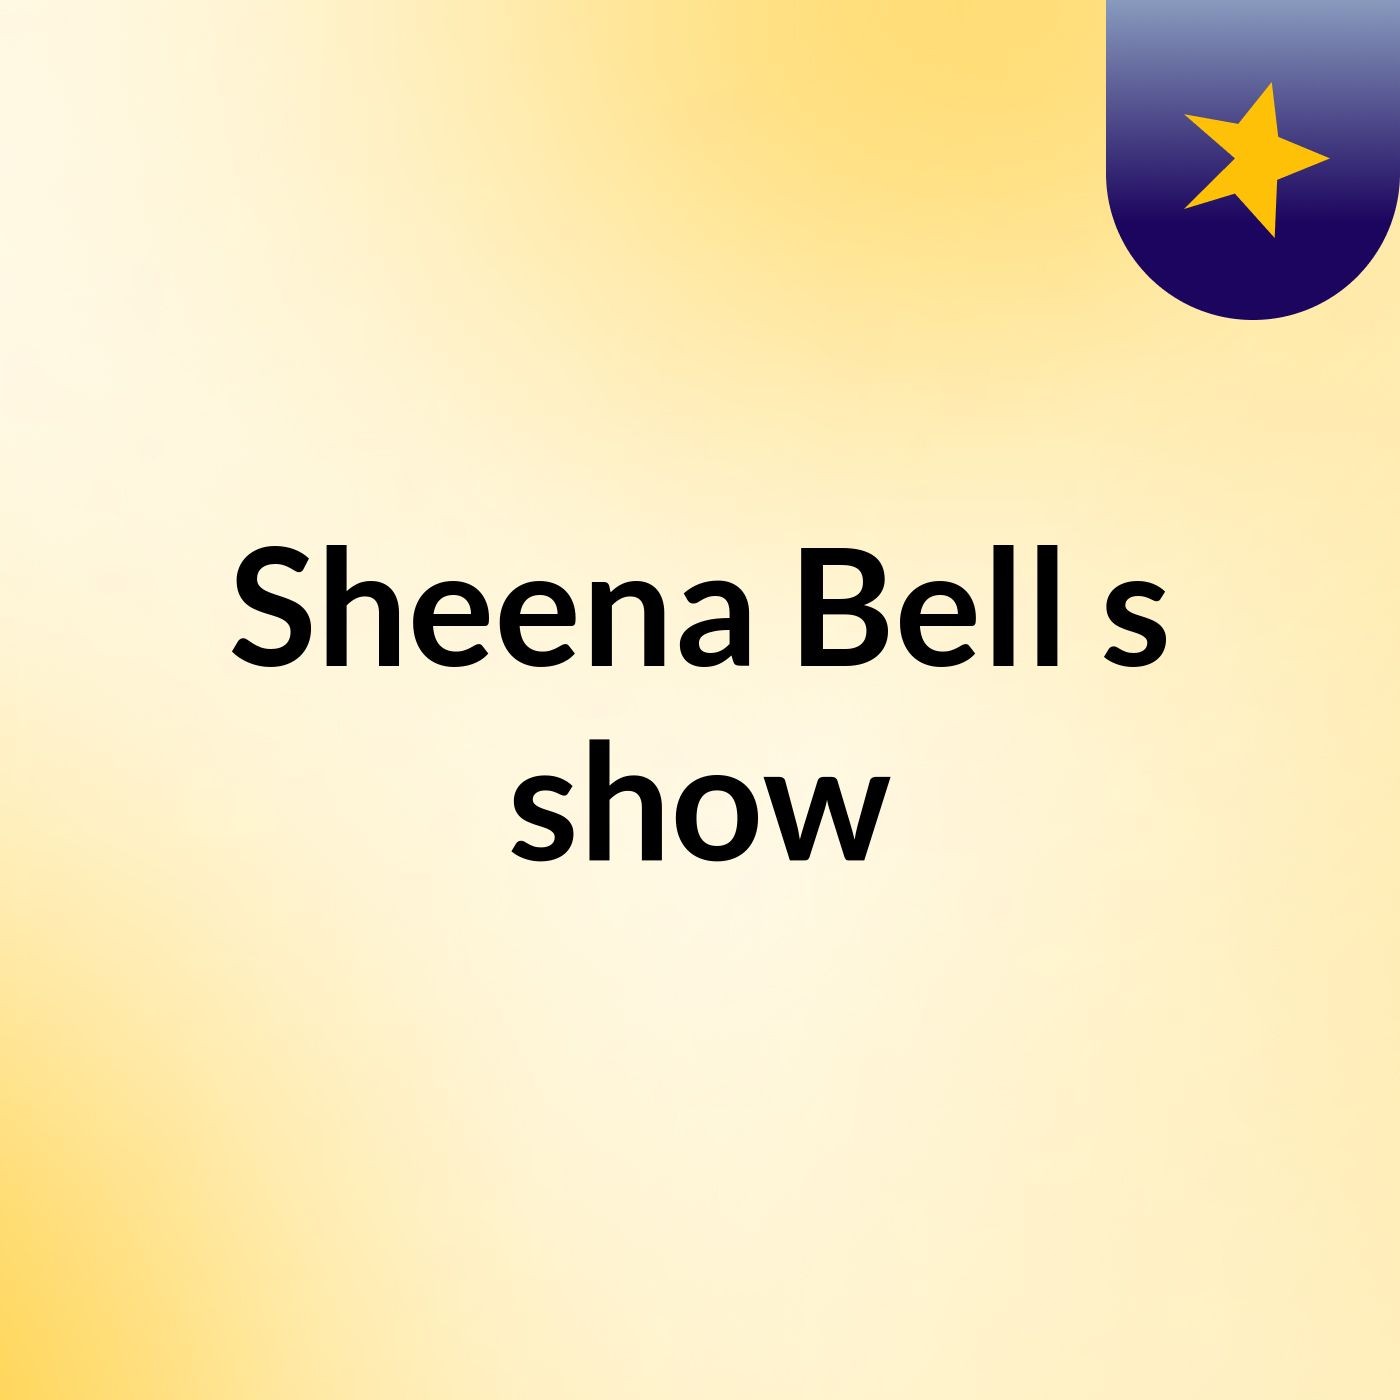 Sheena Bell's show